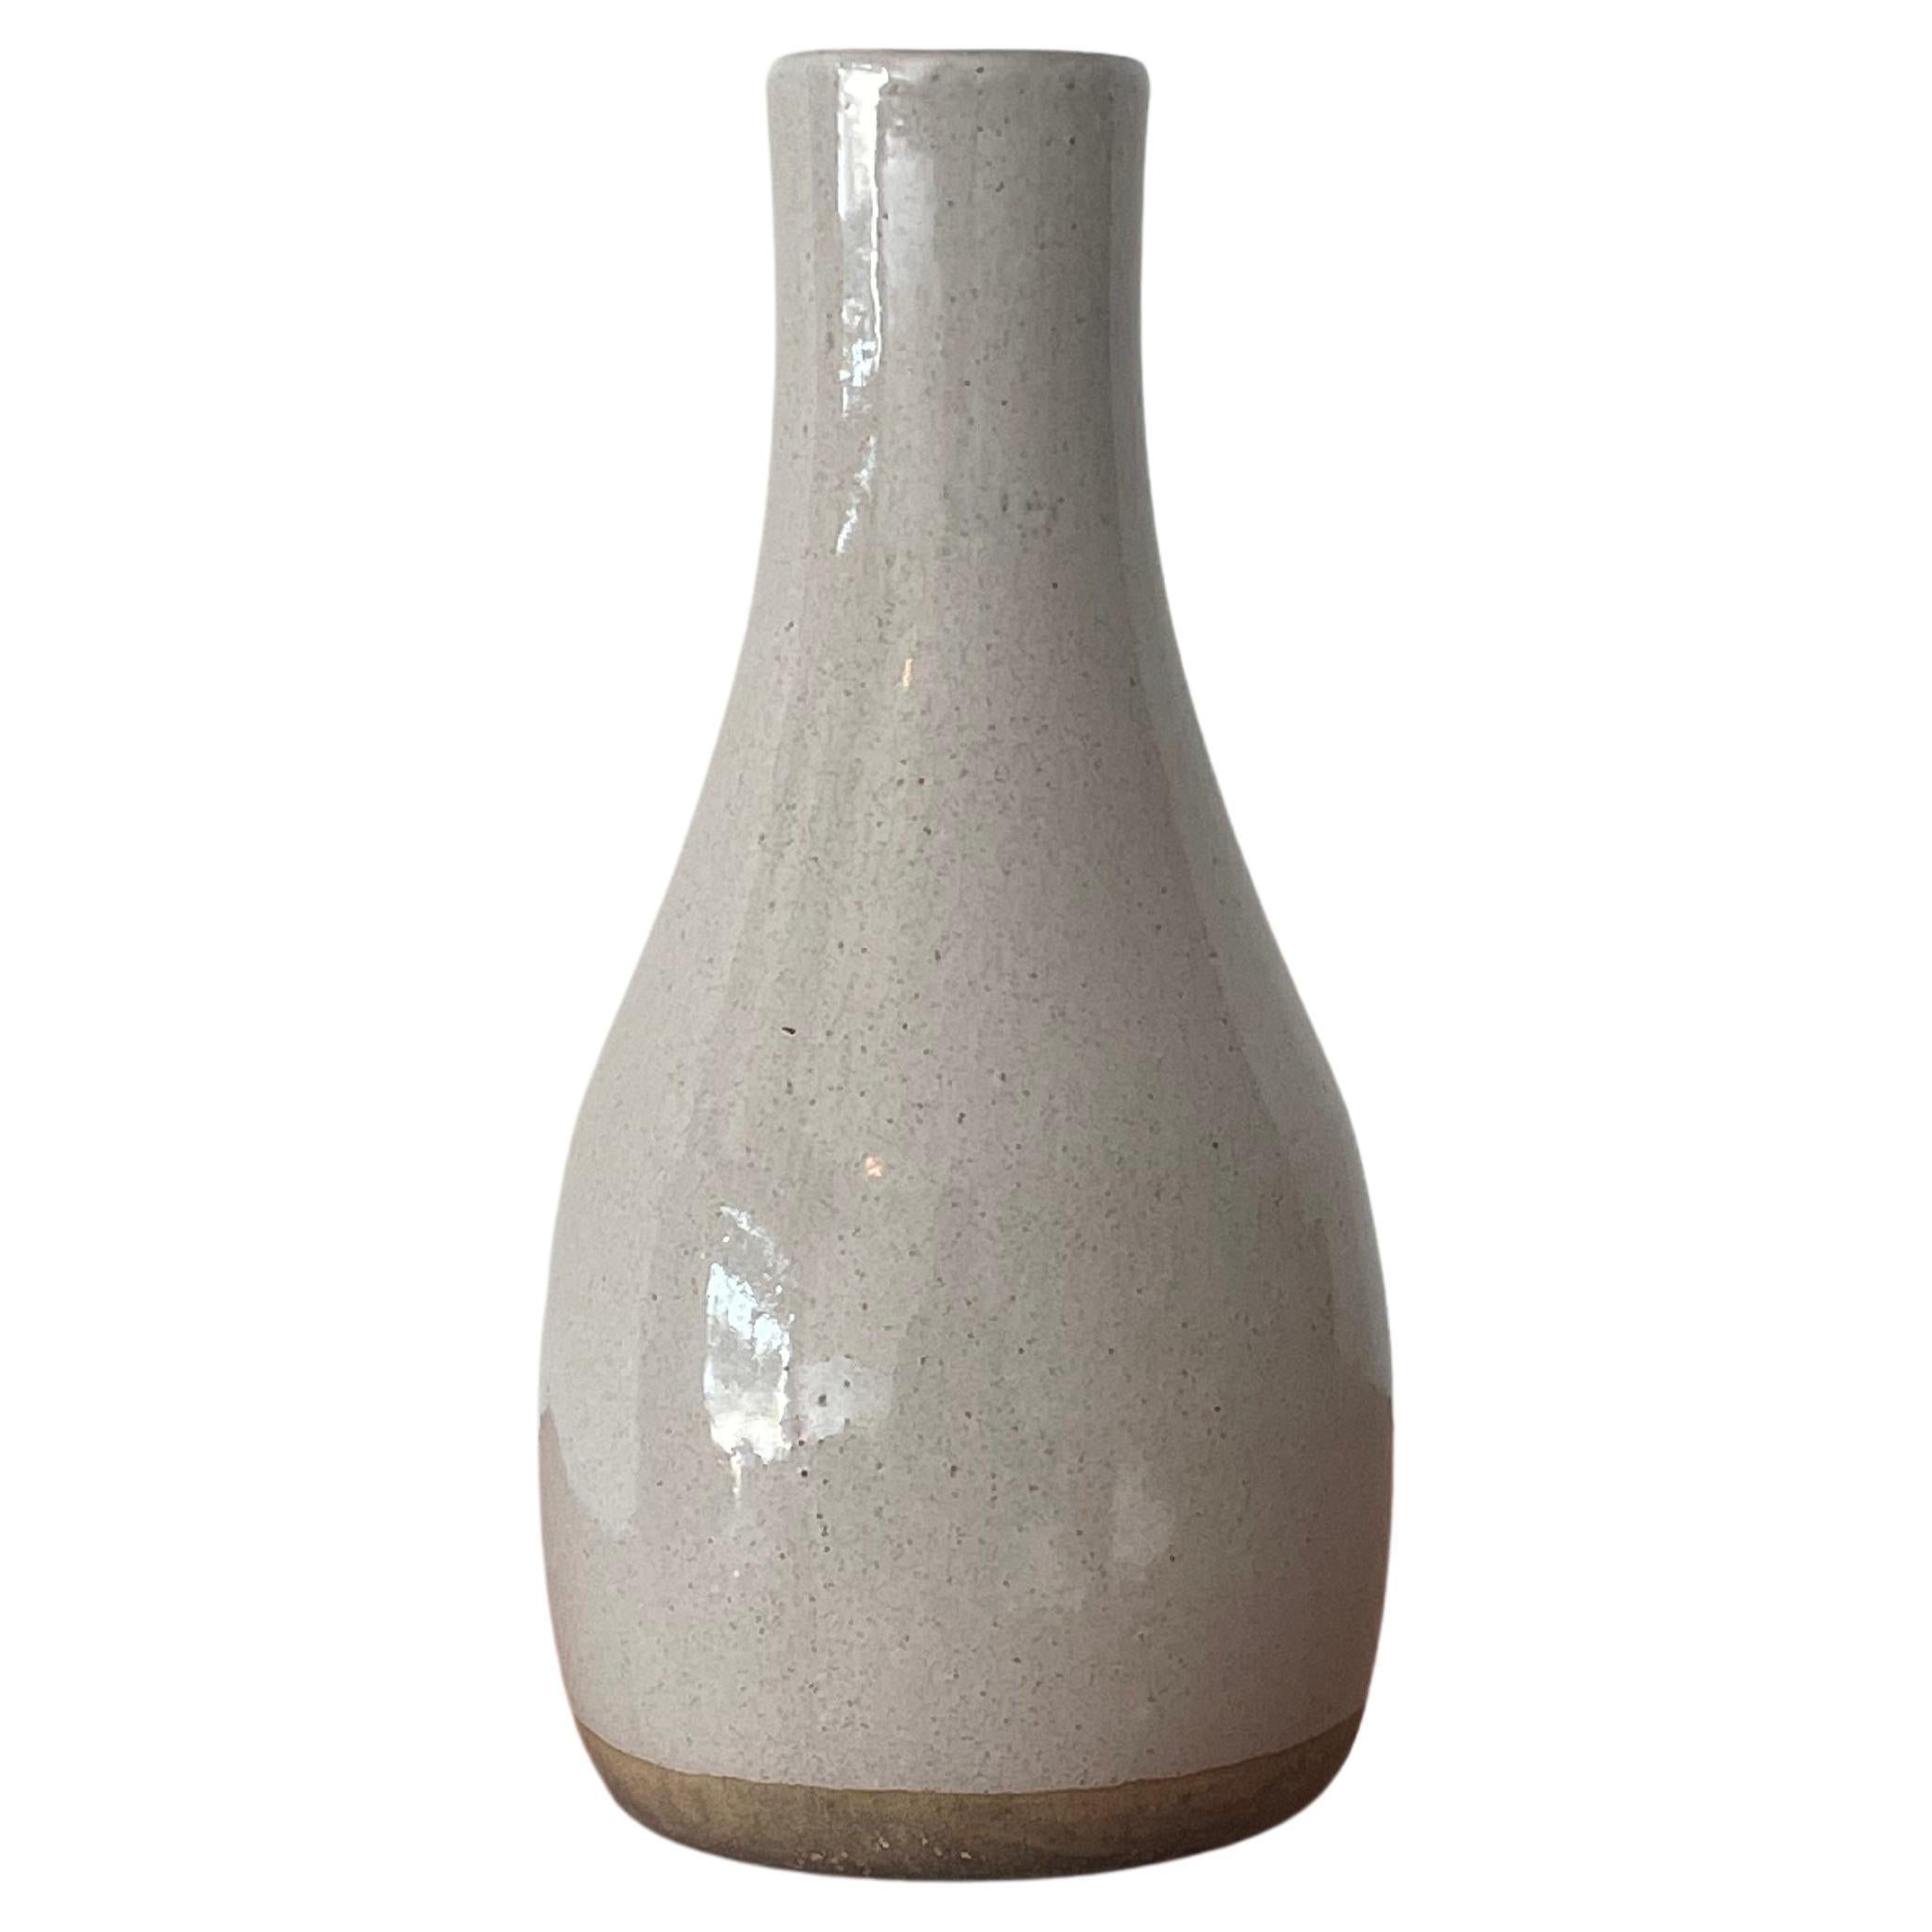 Jane and Gordon Martz Ceramic Vase for Marshall Studios